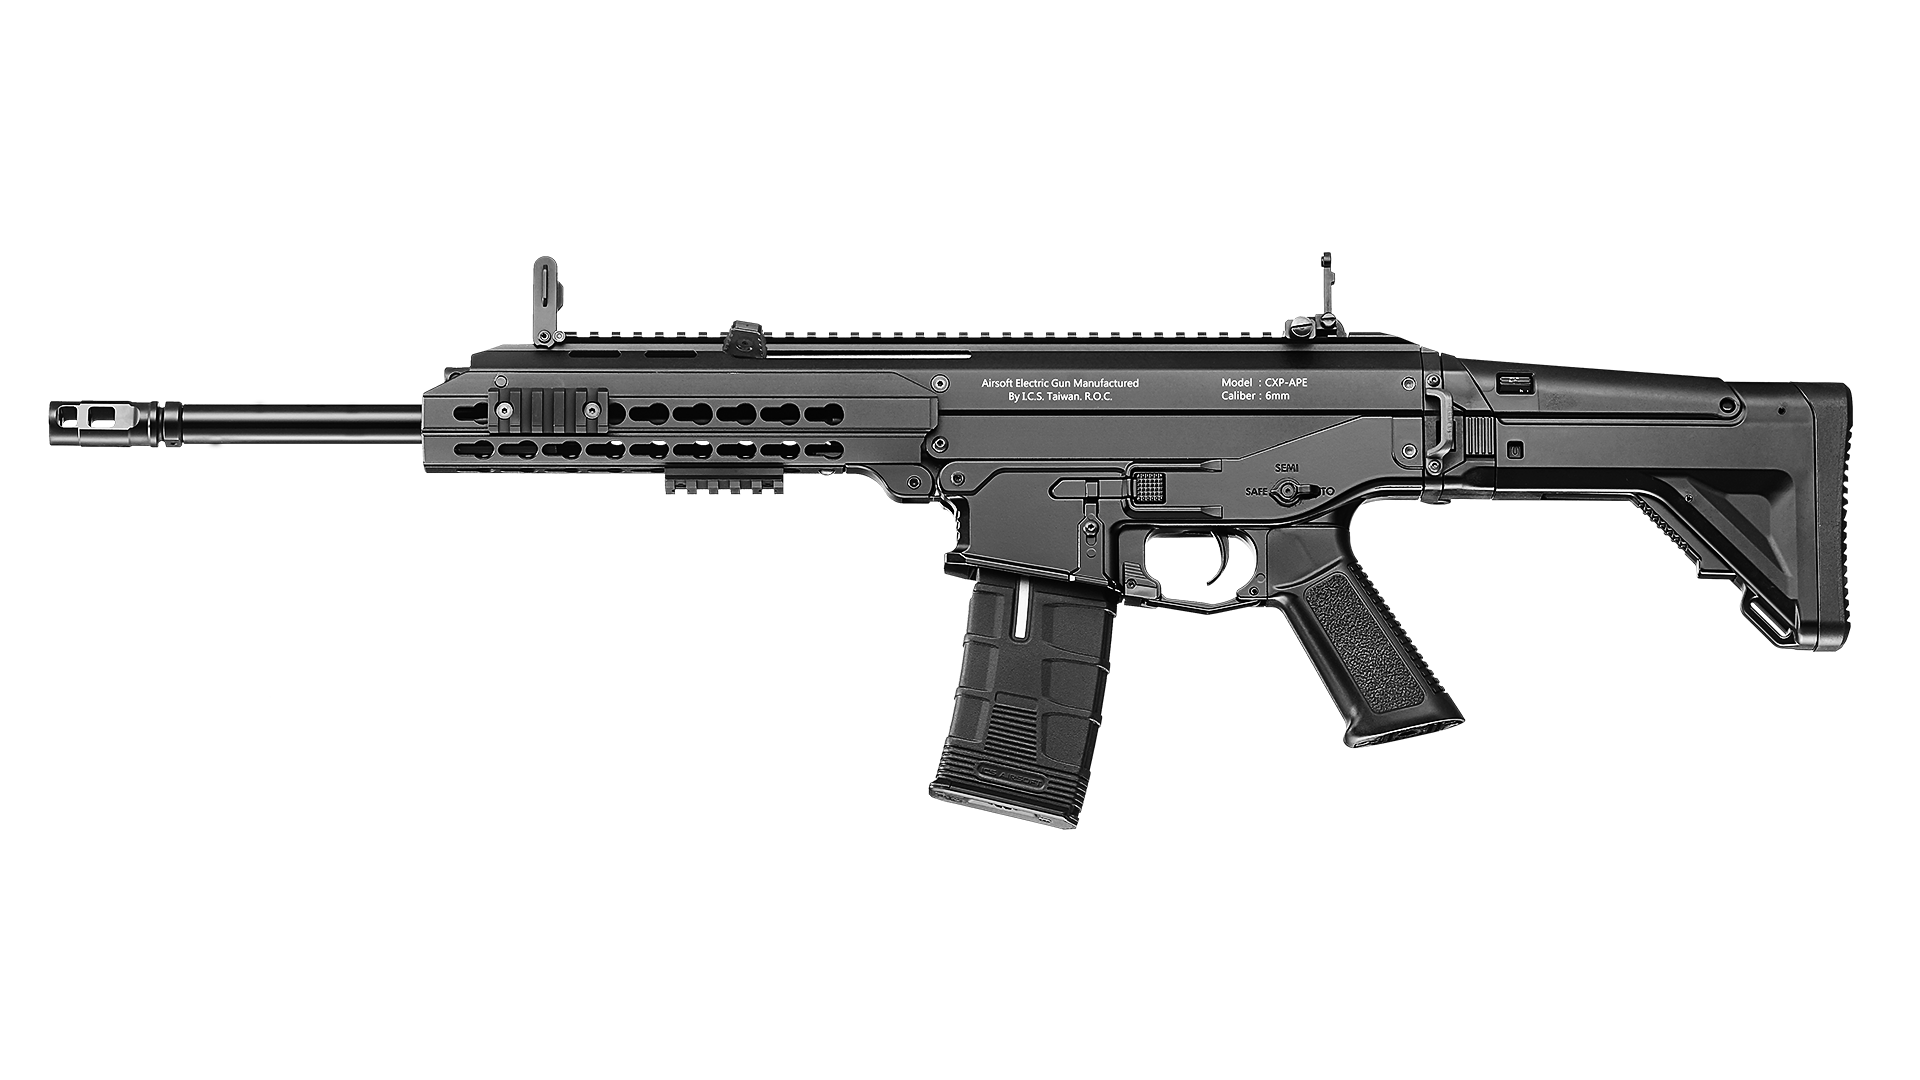  【DISCONTINUED】CXP-APE Rifle SF1 Stock